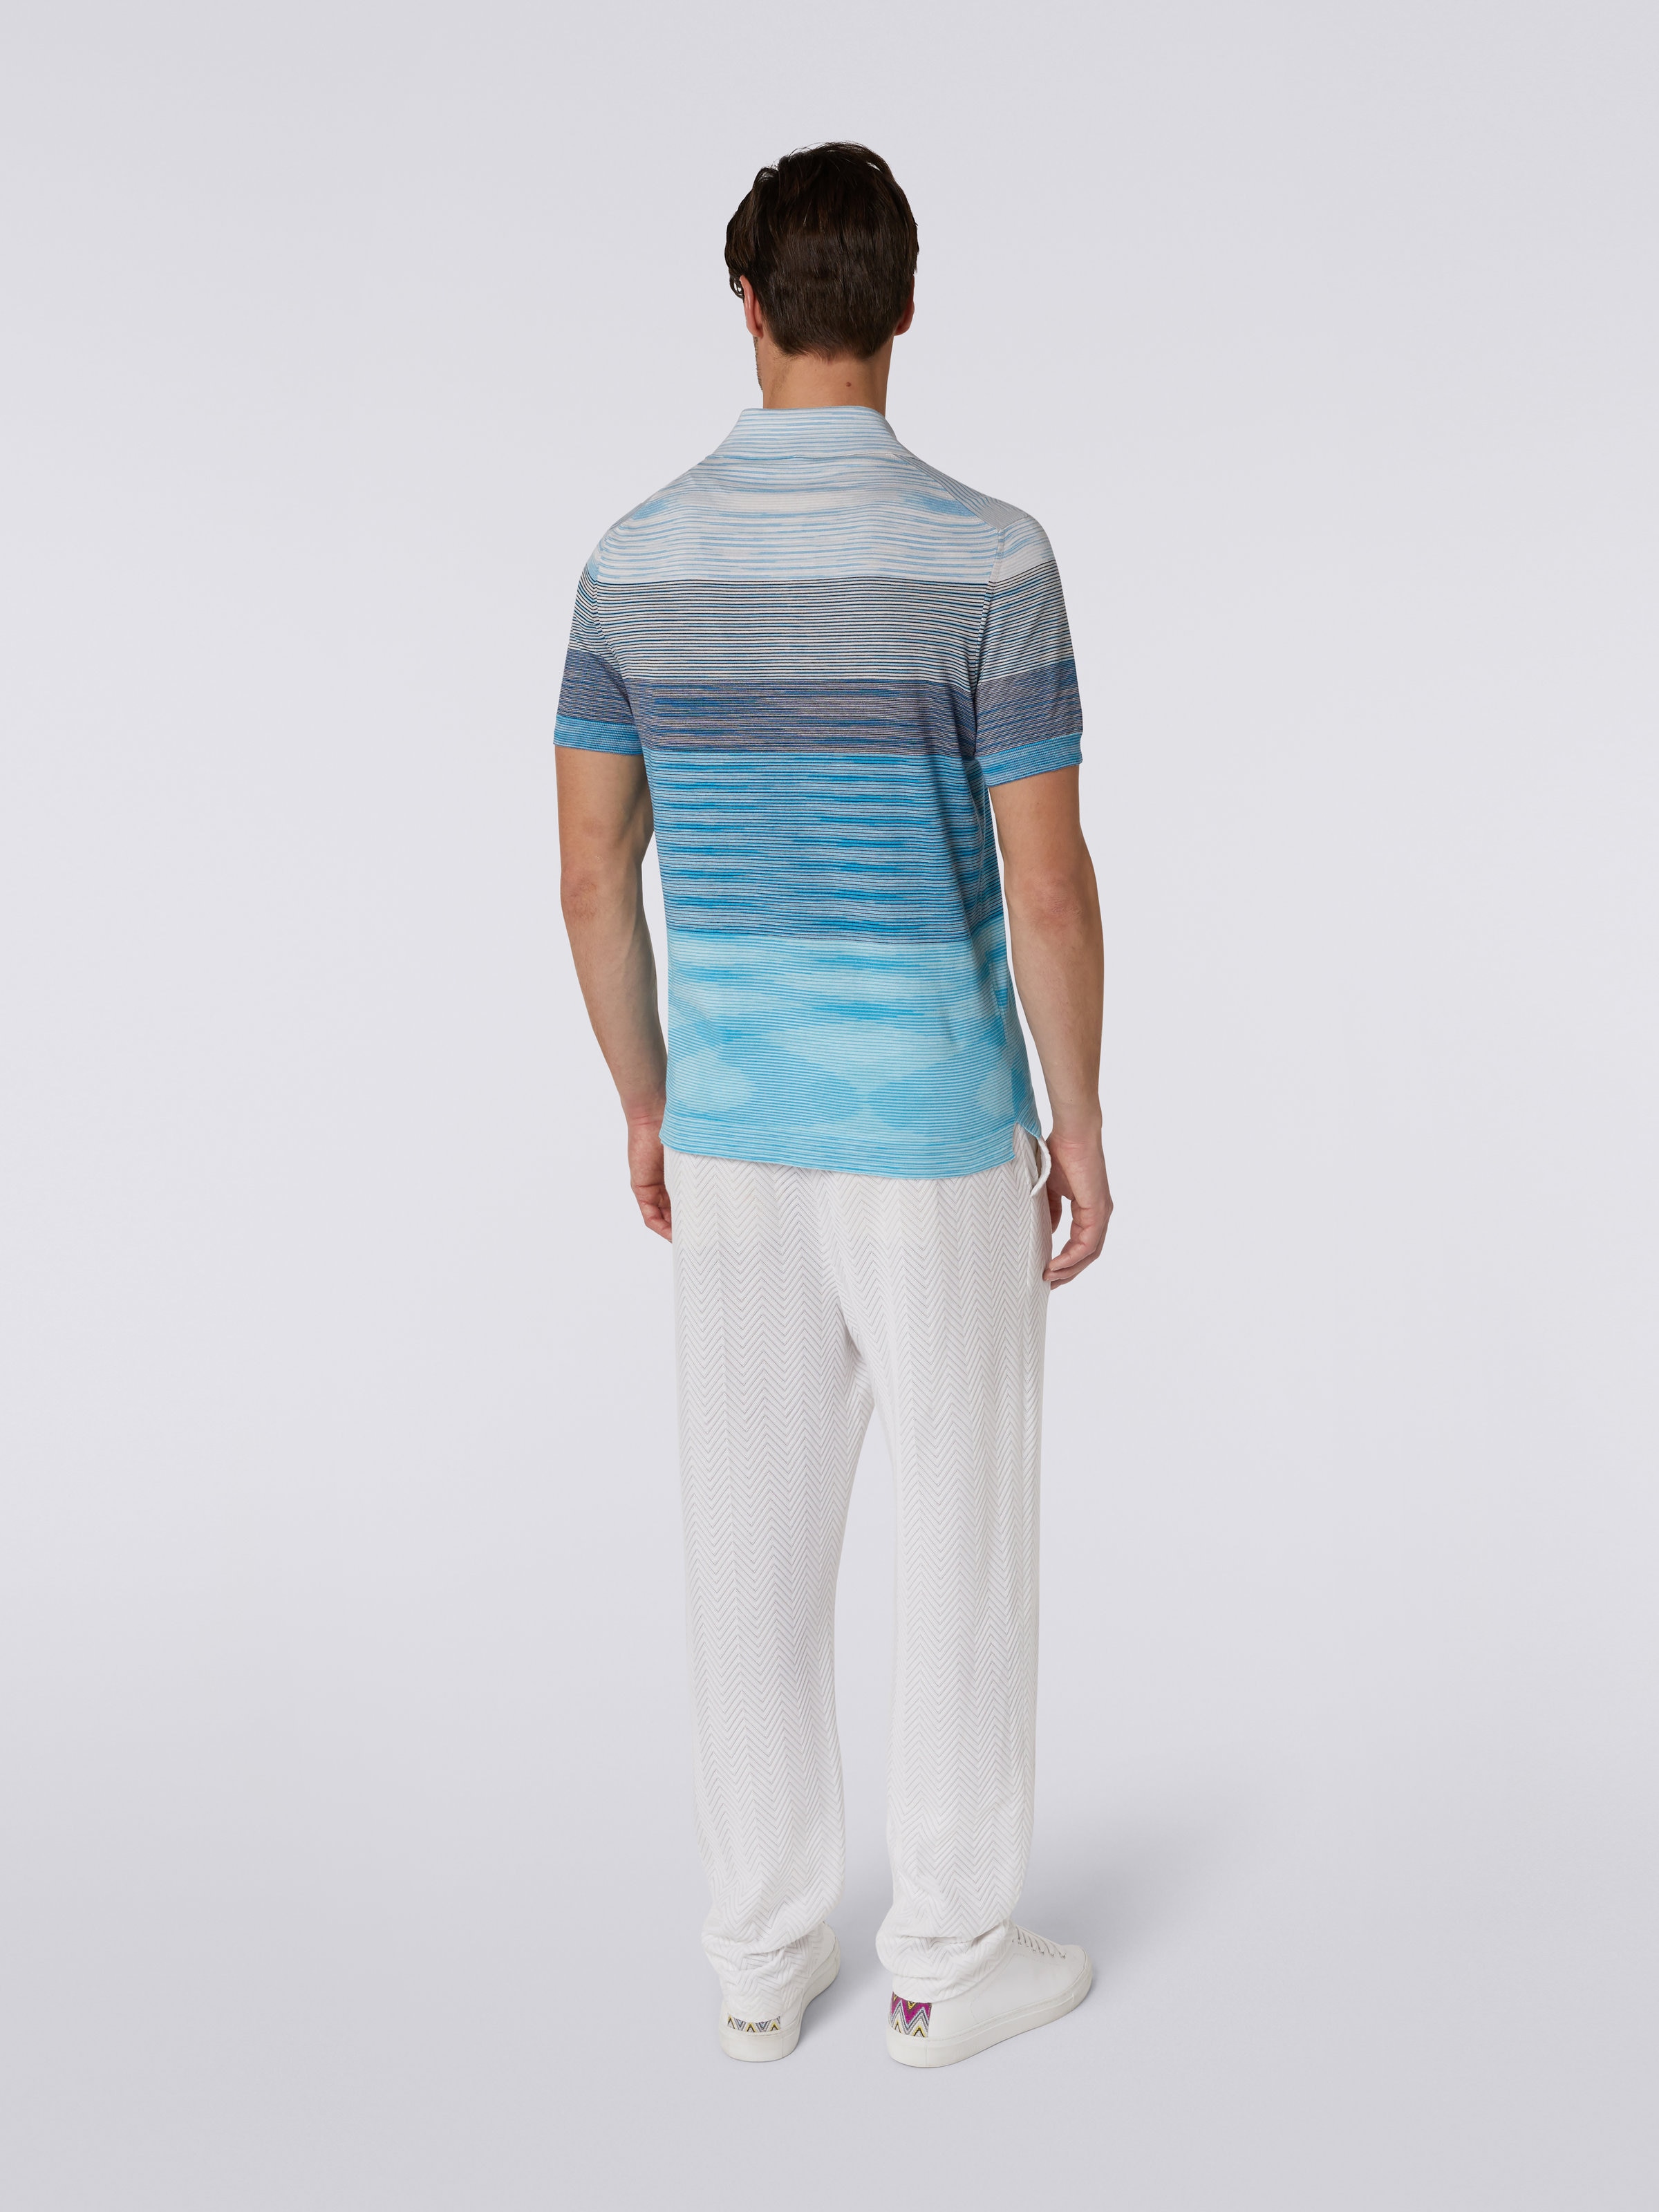 Kurzärmeliges Poloshirt aus gestreifter Baumwolle mit Dégradé-Effekt, Weiß & Hellblau - 3